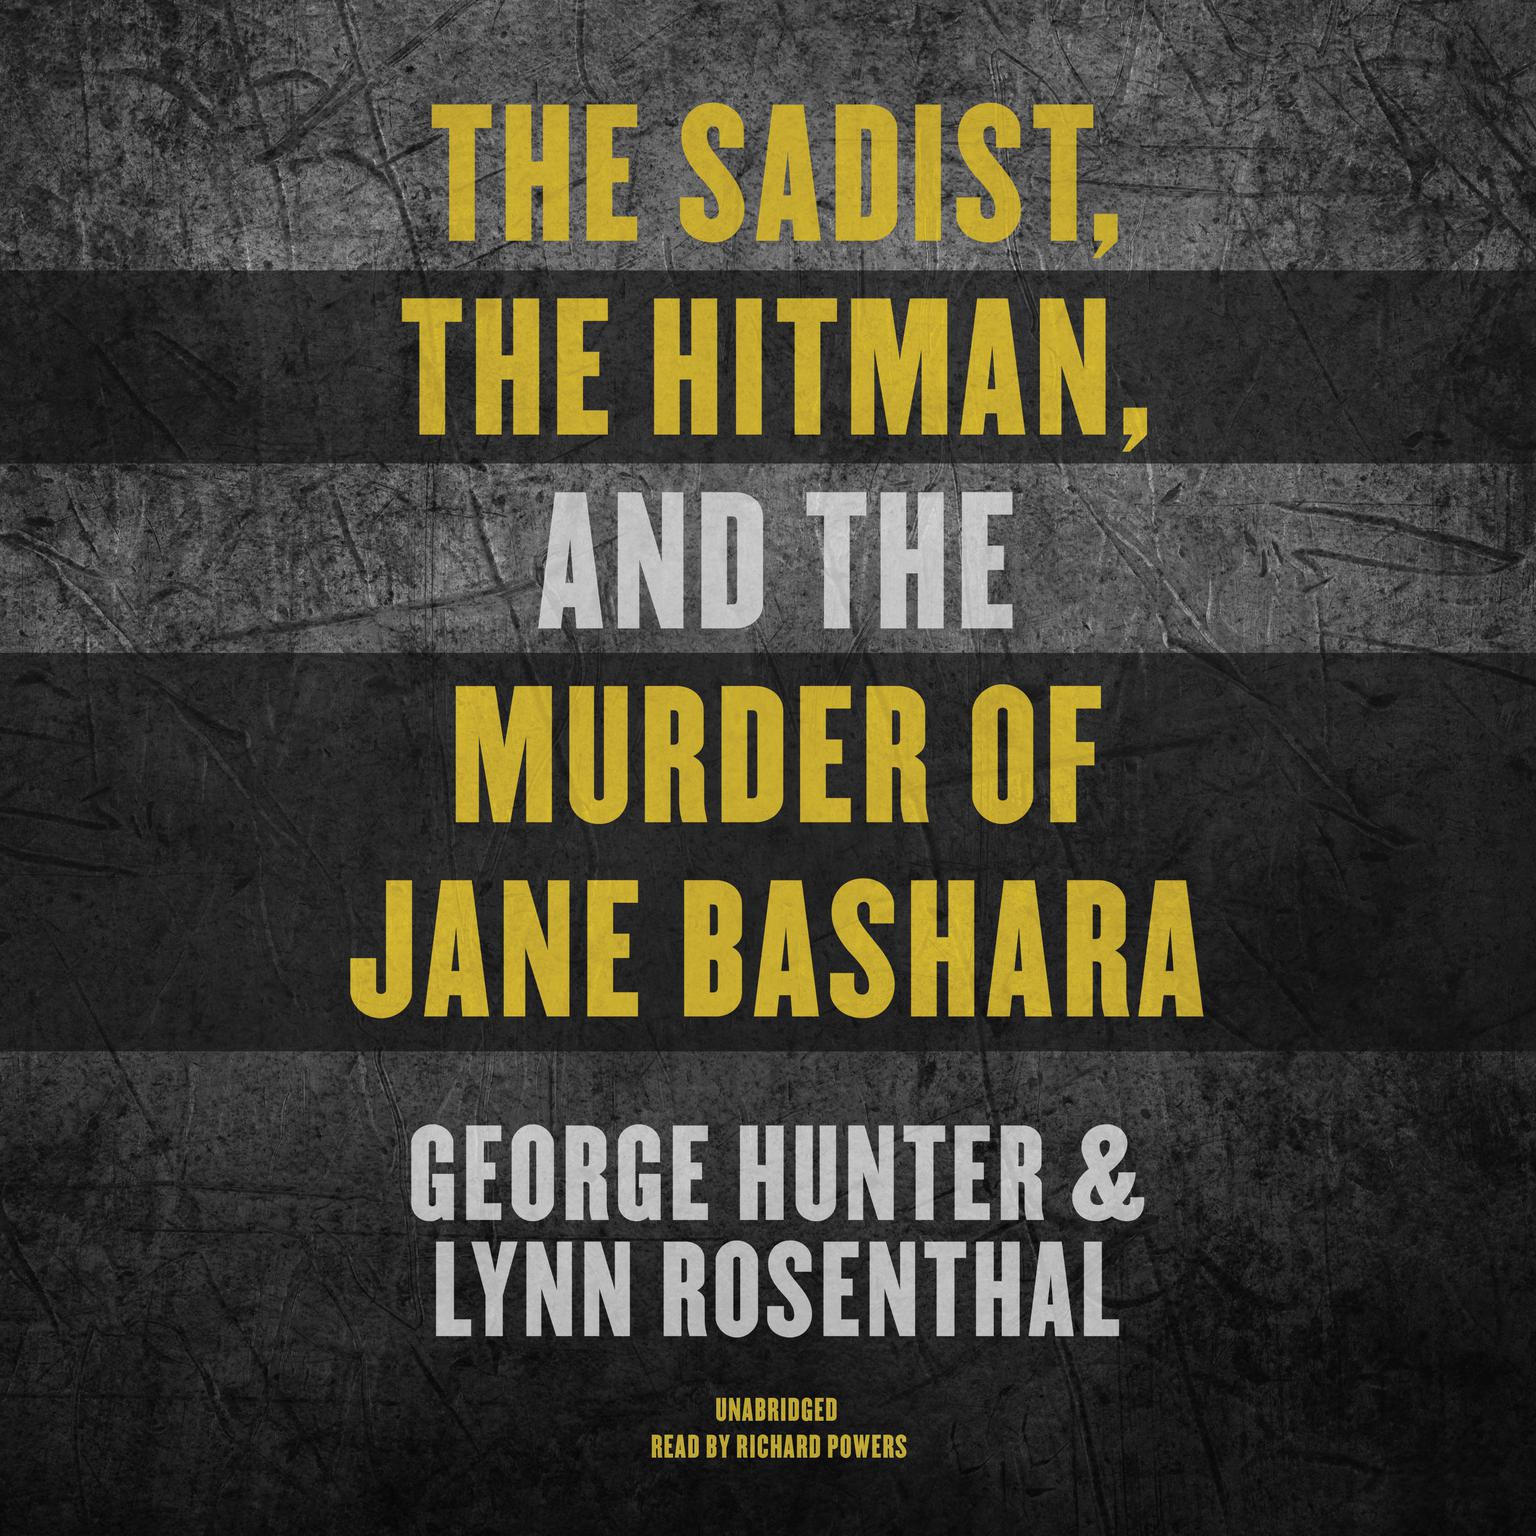 The Sadist, the Hitman, and the Murder of Jane Bashara Audiobook, by George Hunter